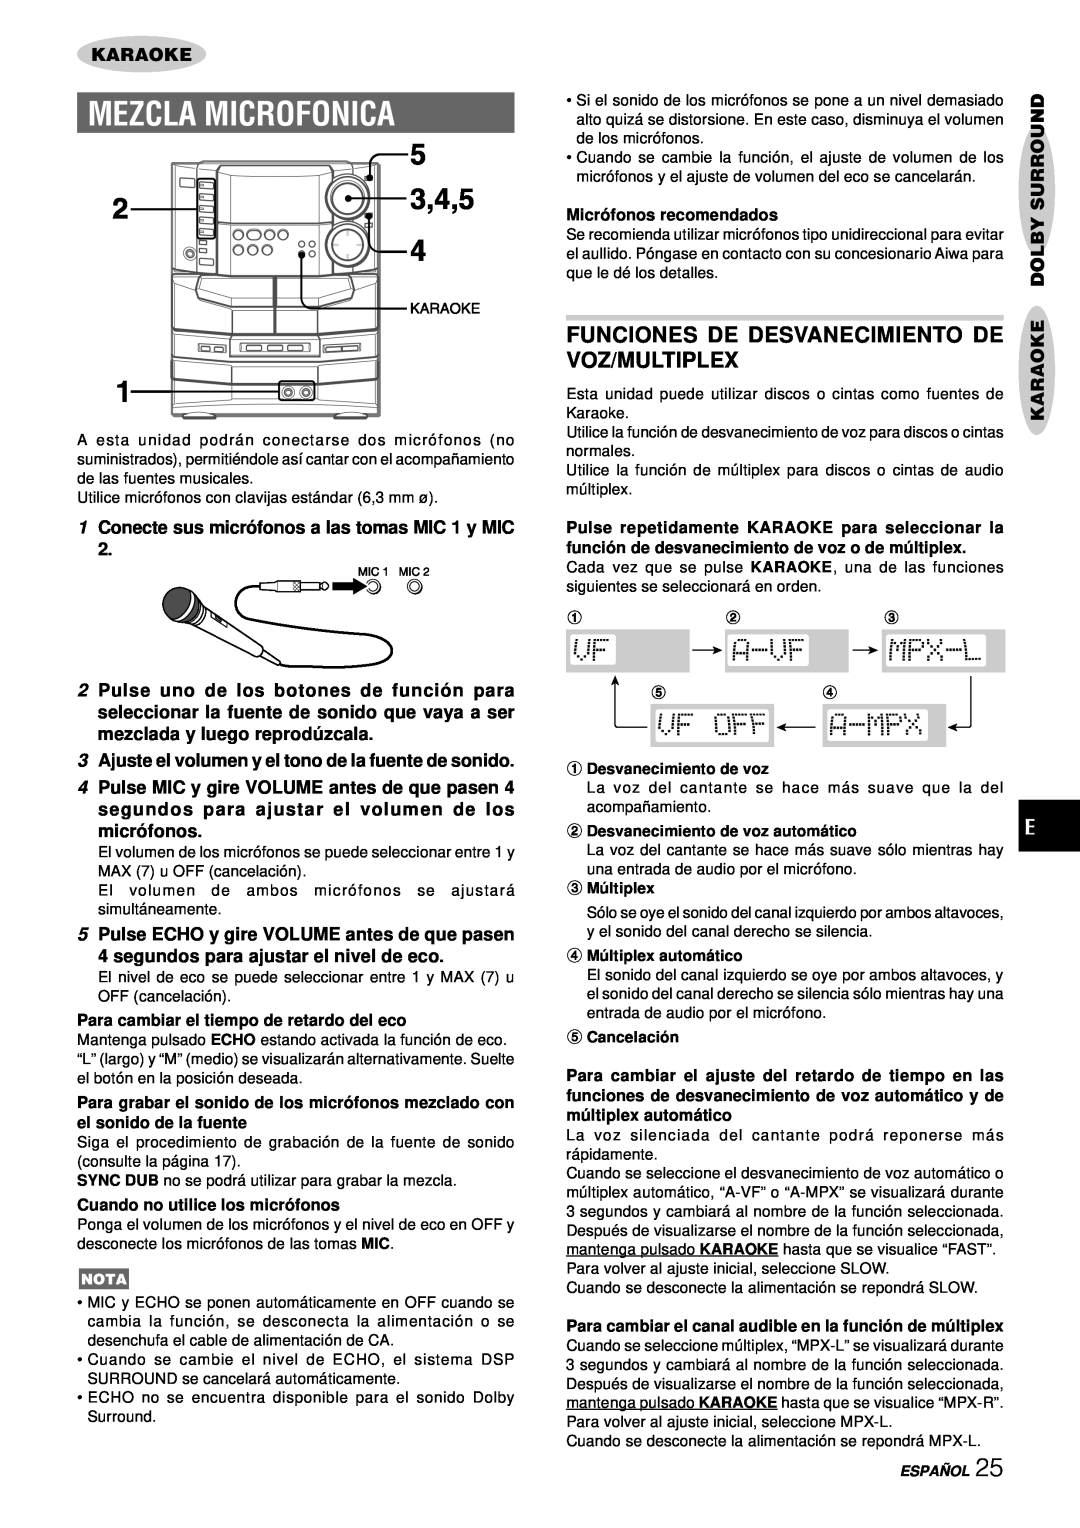 Aiwa NSX-DS8 manual Mezcla Microfonica, Funciones De Desvanecimiento De Voz/Multiplex, Karaoke, micró fonos 